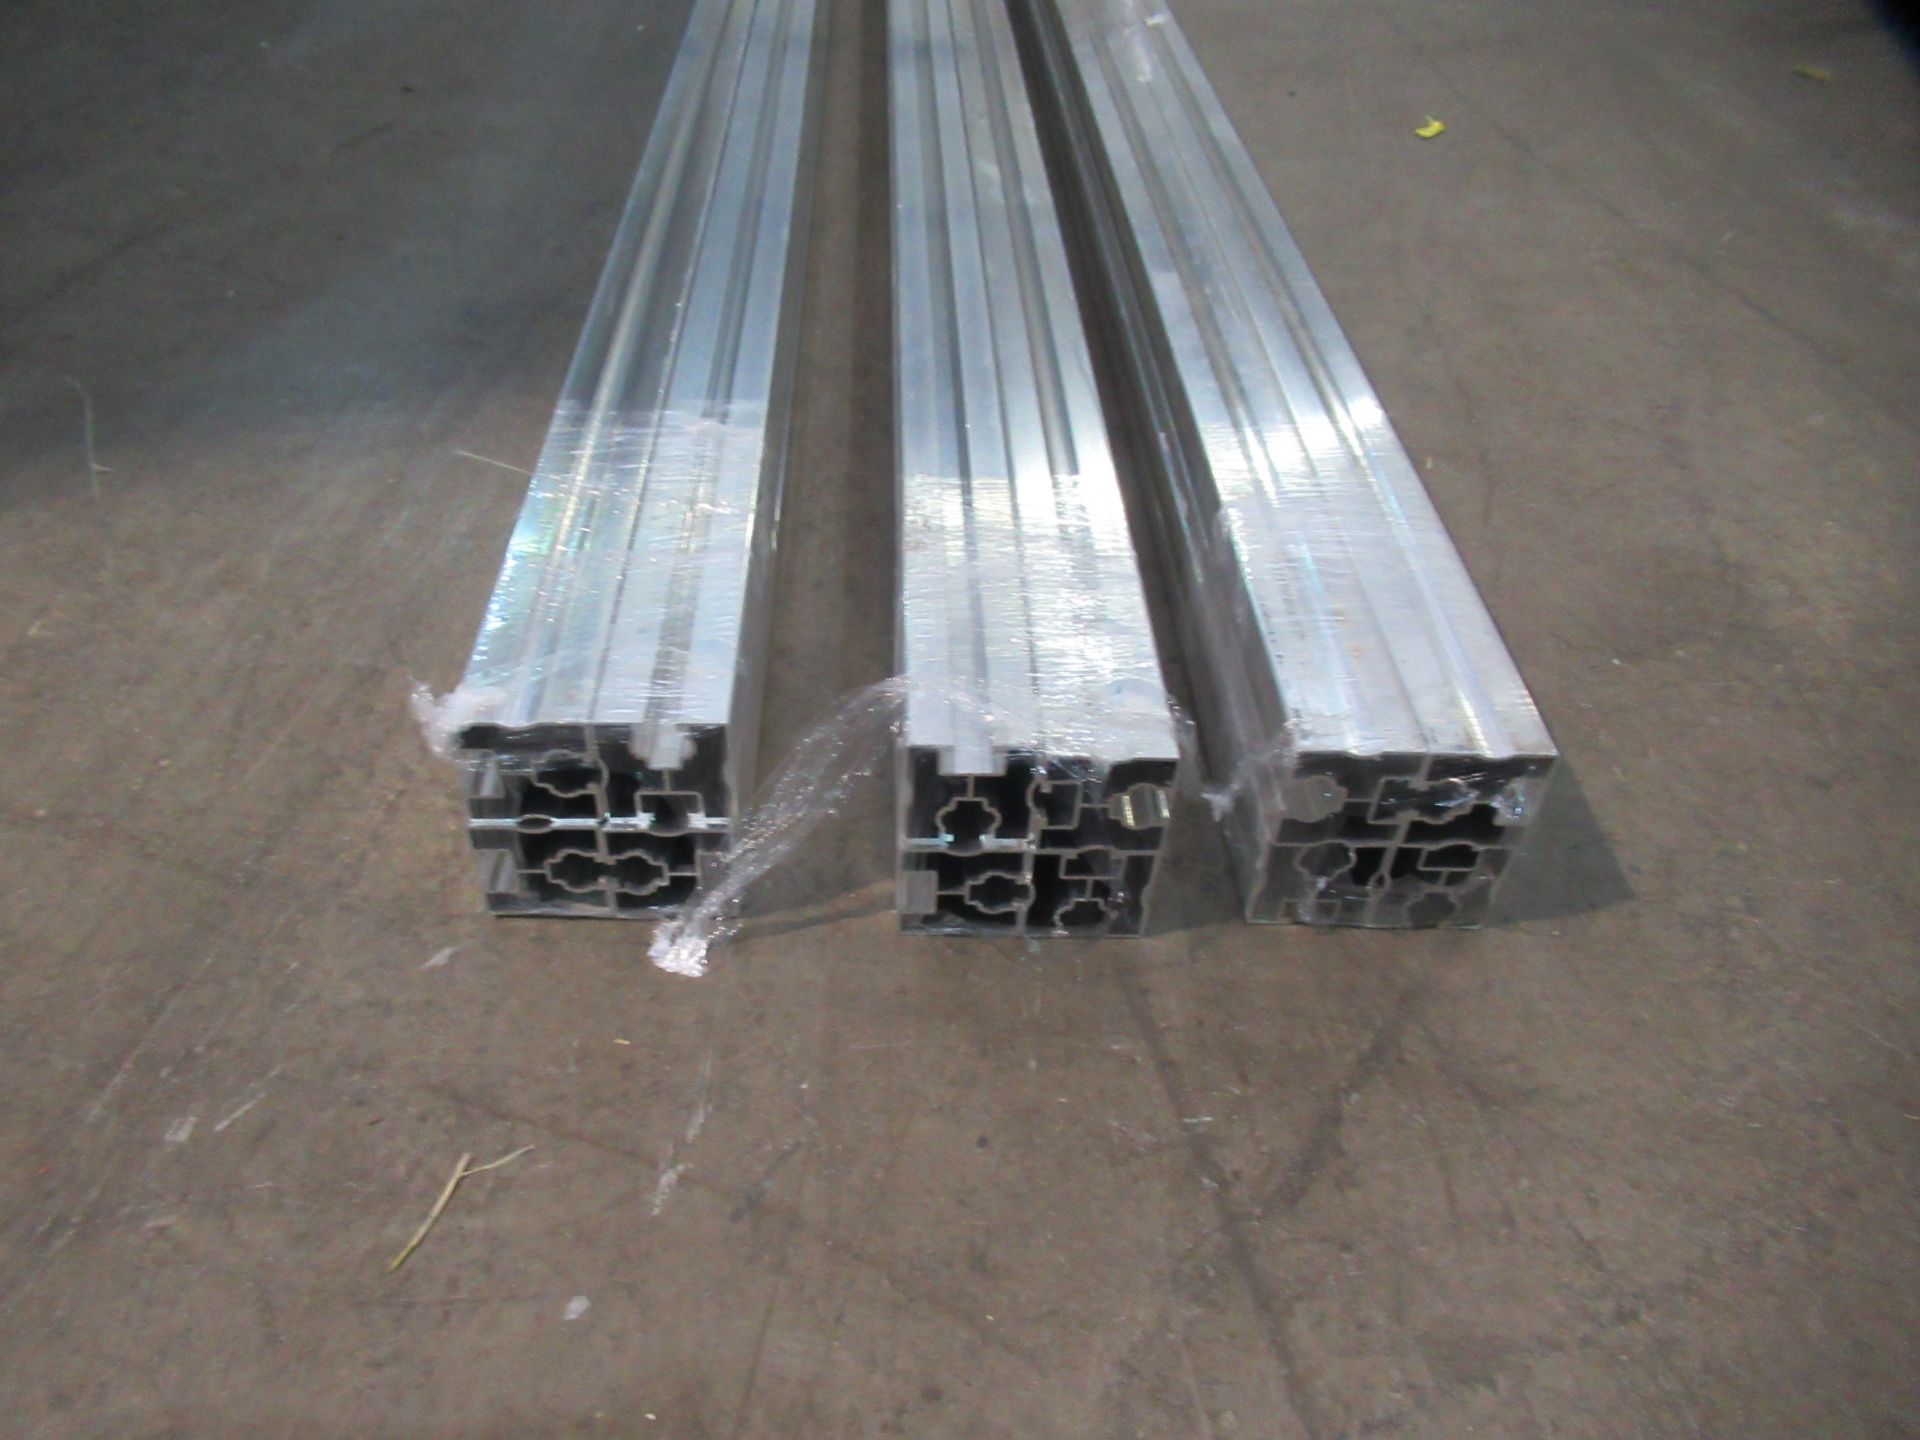 12x Schletter 3300mm Rails (3x packs of 4x rails) - Image 2 of 2